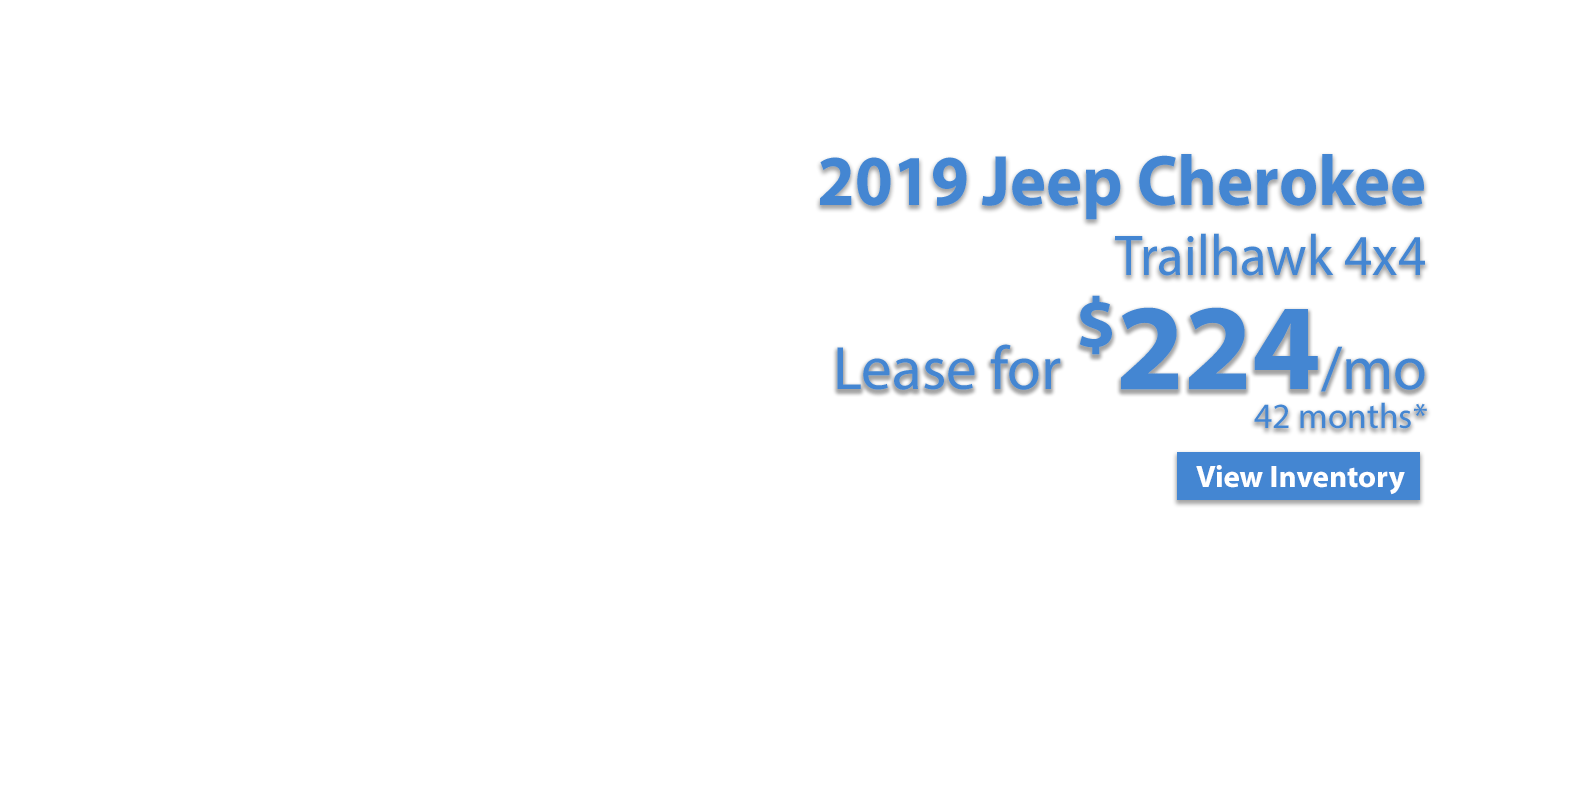 Dealer.com Logo - New & used Chrysler Jeep dealer serving Denver | Auto Repair | Car Loans